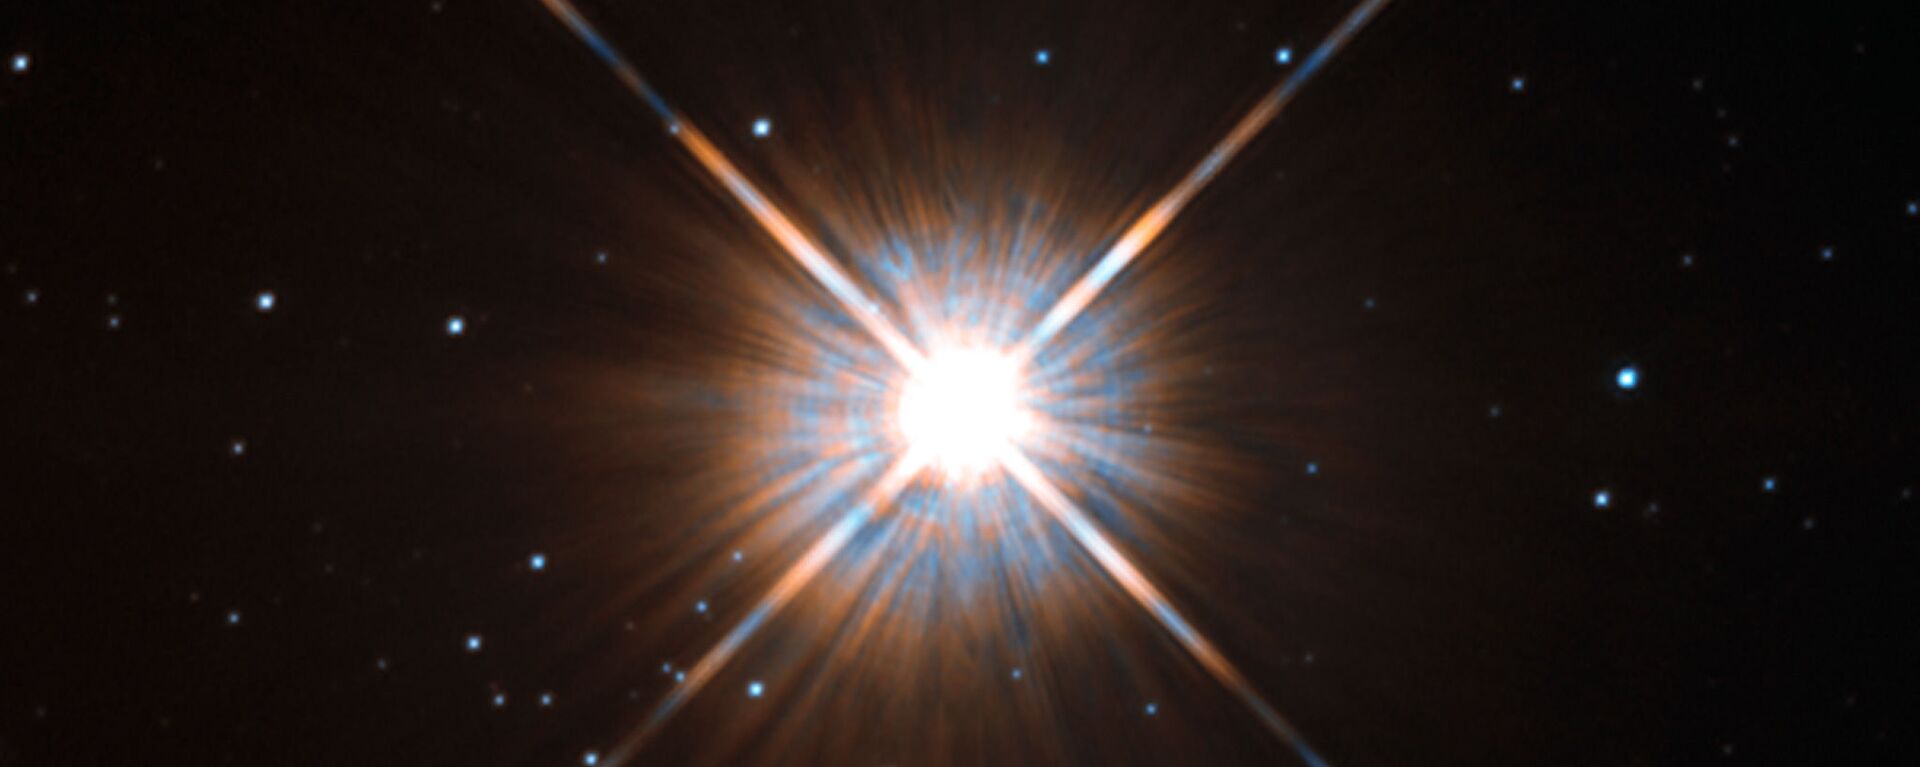 La estrella Próxima Centauri - Sputnik Mundo, 1920, 10.12.2020